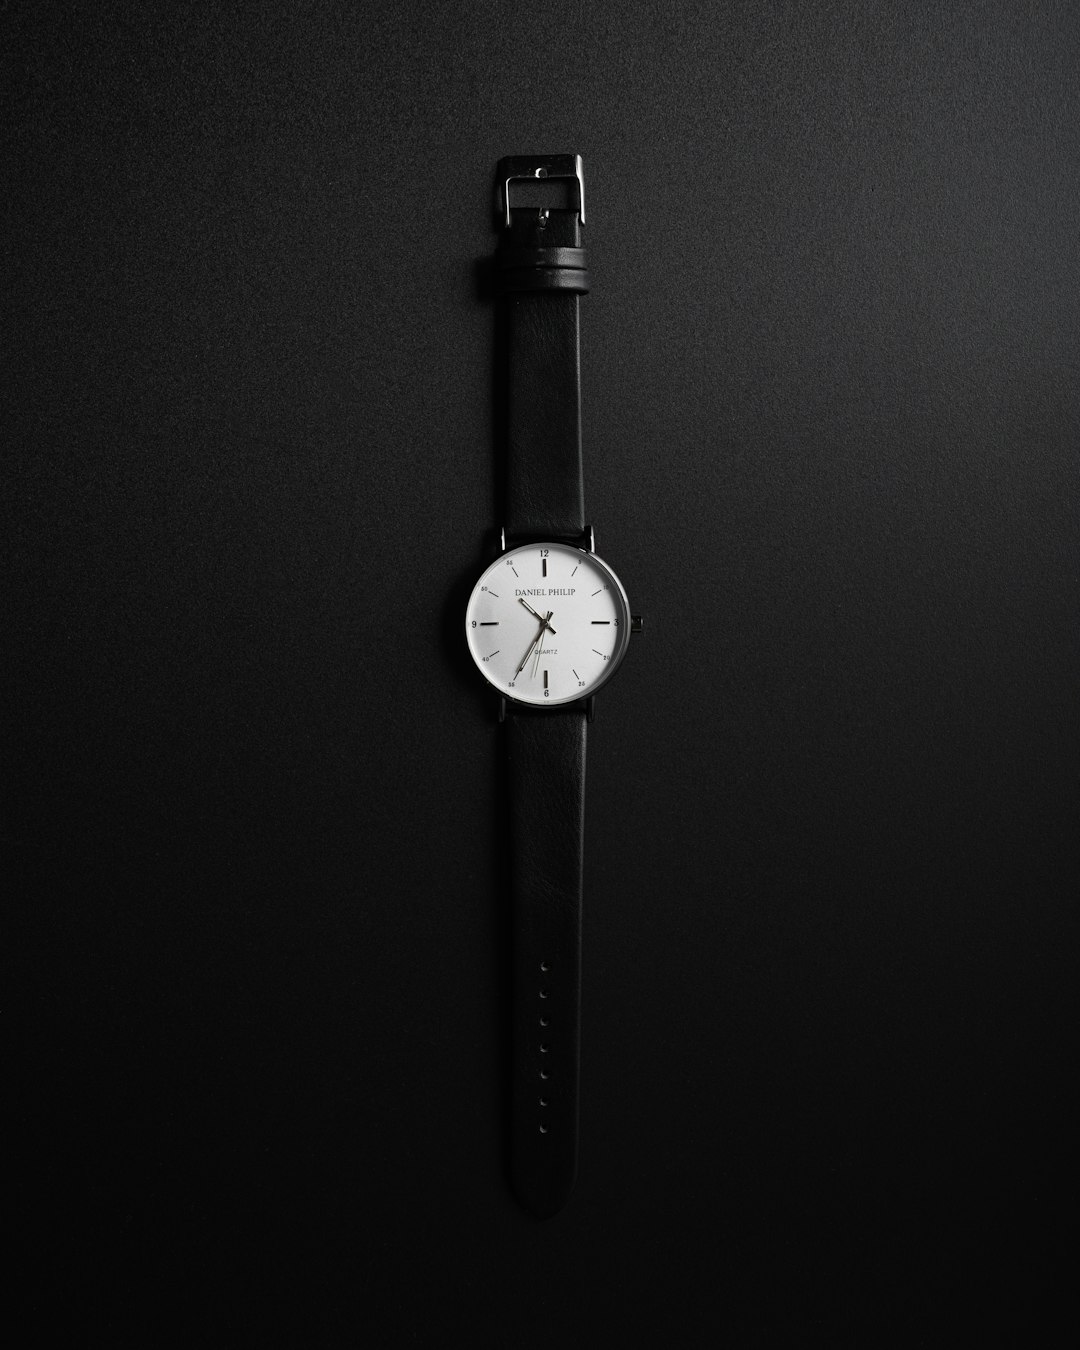 black leather strap silver round analog watch